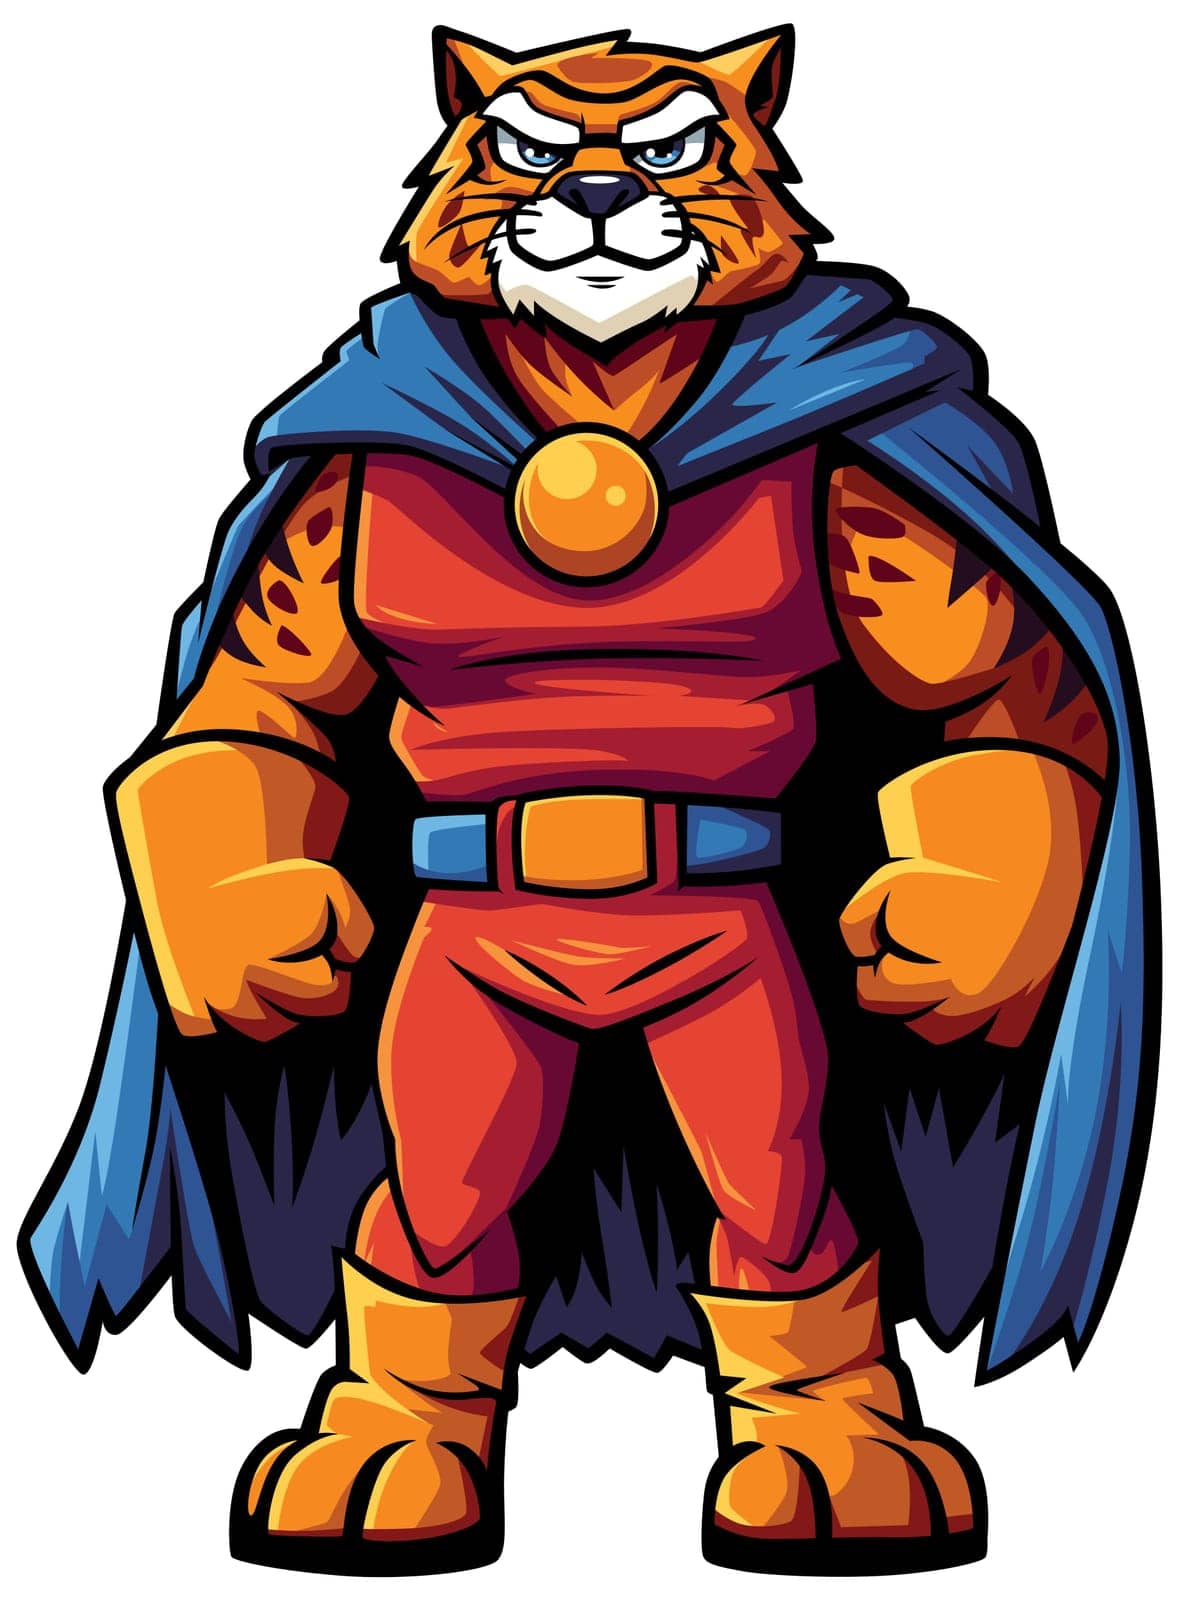 Tiger Superhero Mascot by Malchev